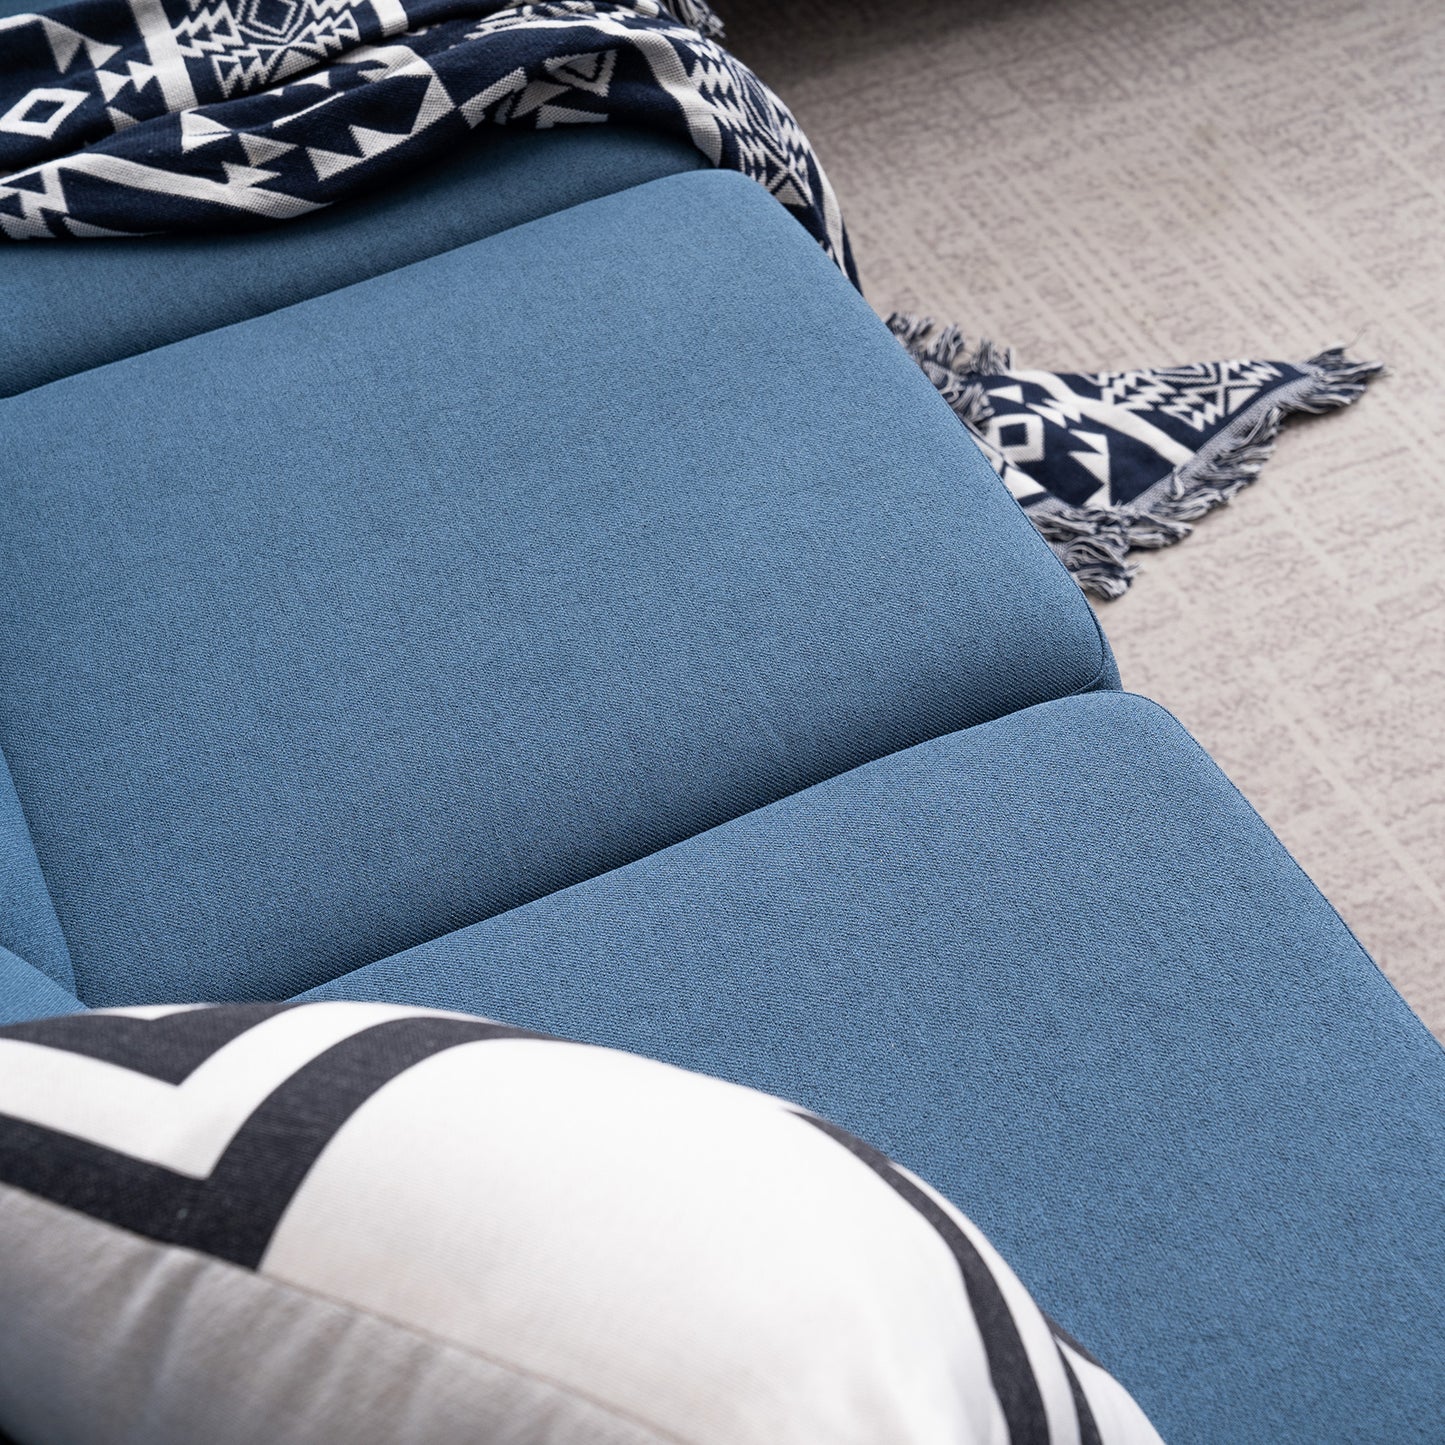 Double Seat Indoor Modular Sofa Navy Blue